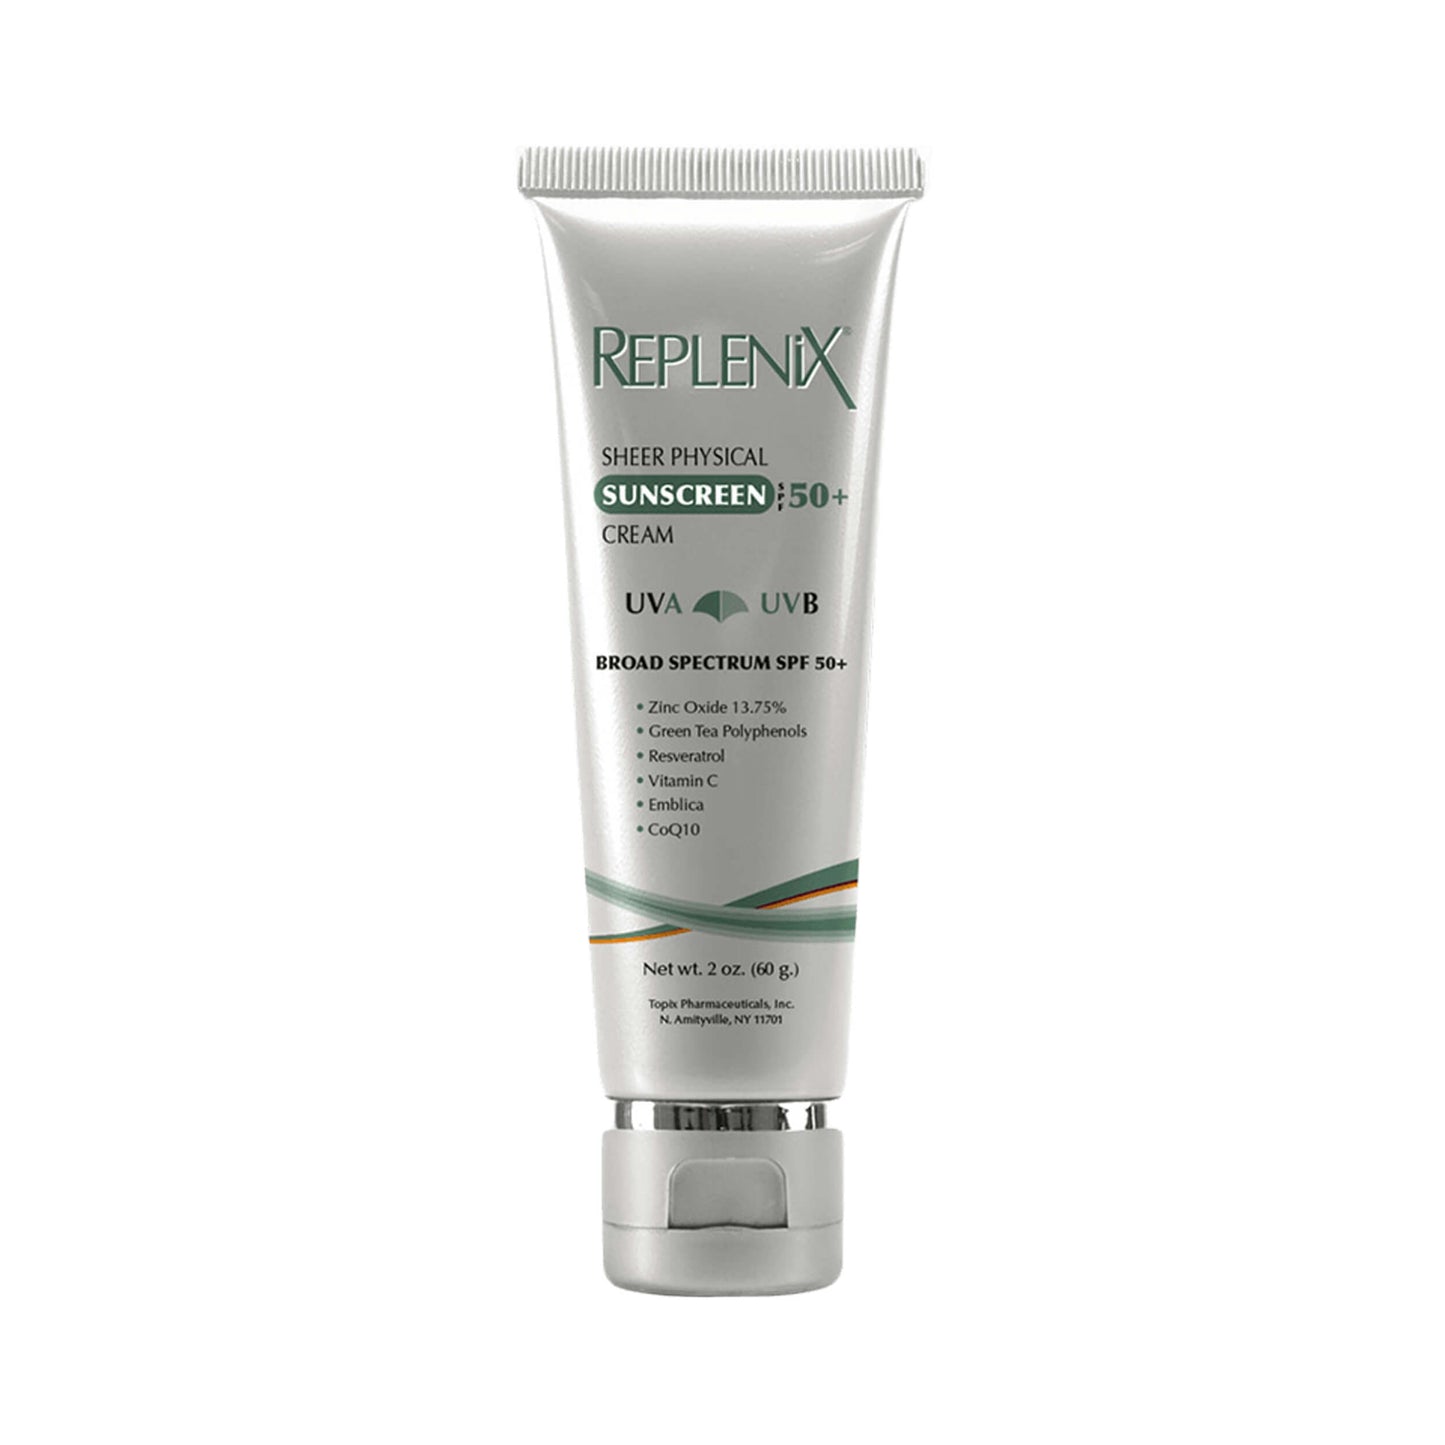 Replenix Sheer Physical Sunscreen Cream SPF 50 Plus 60g